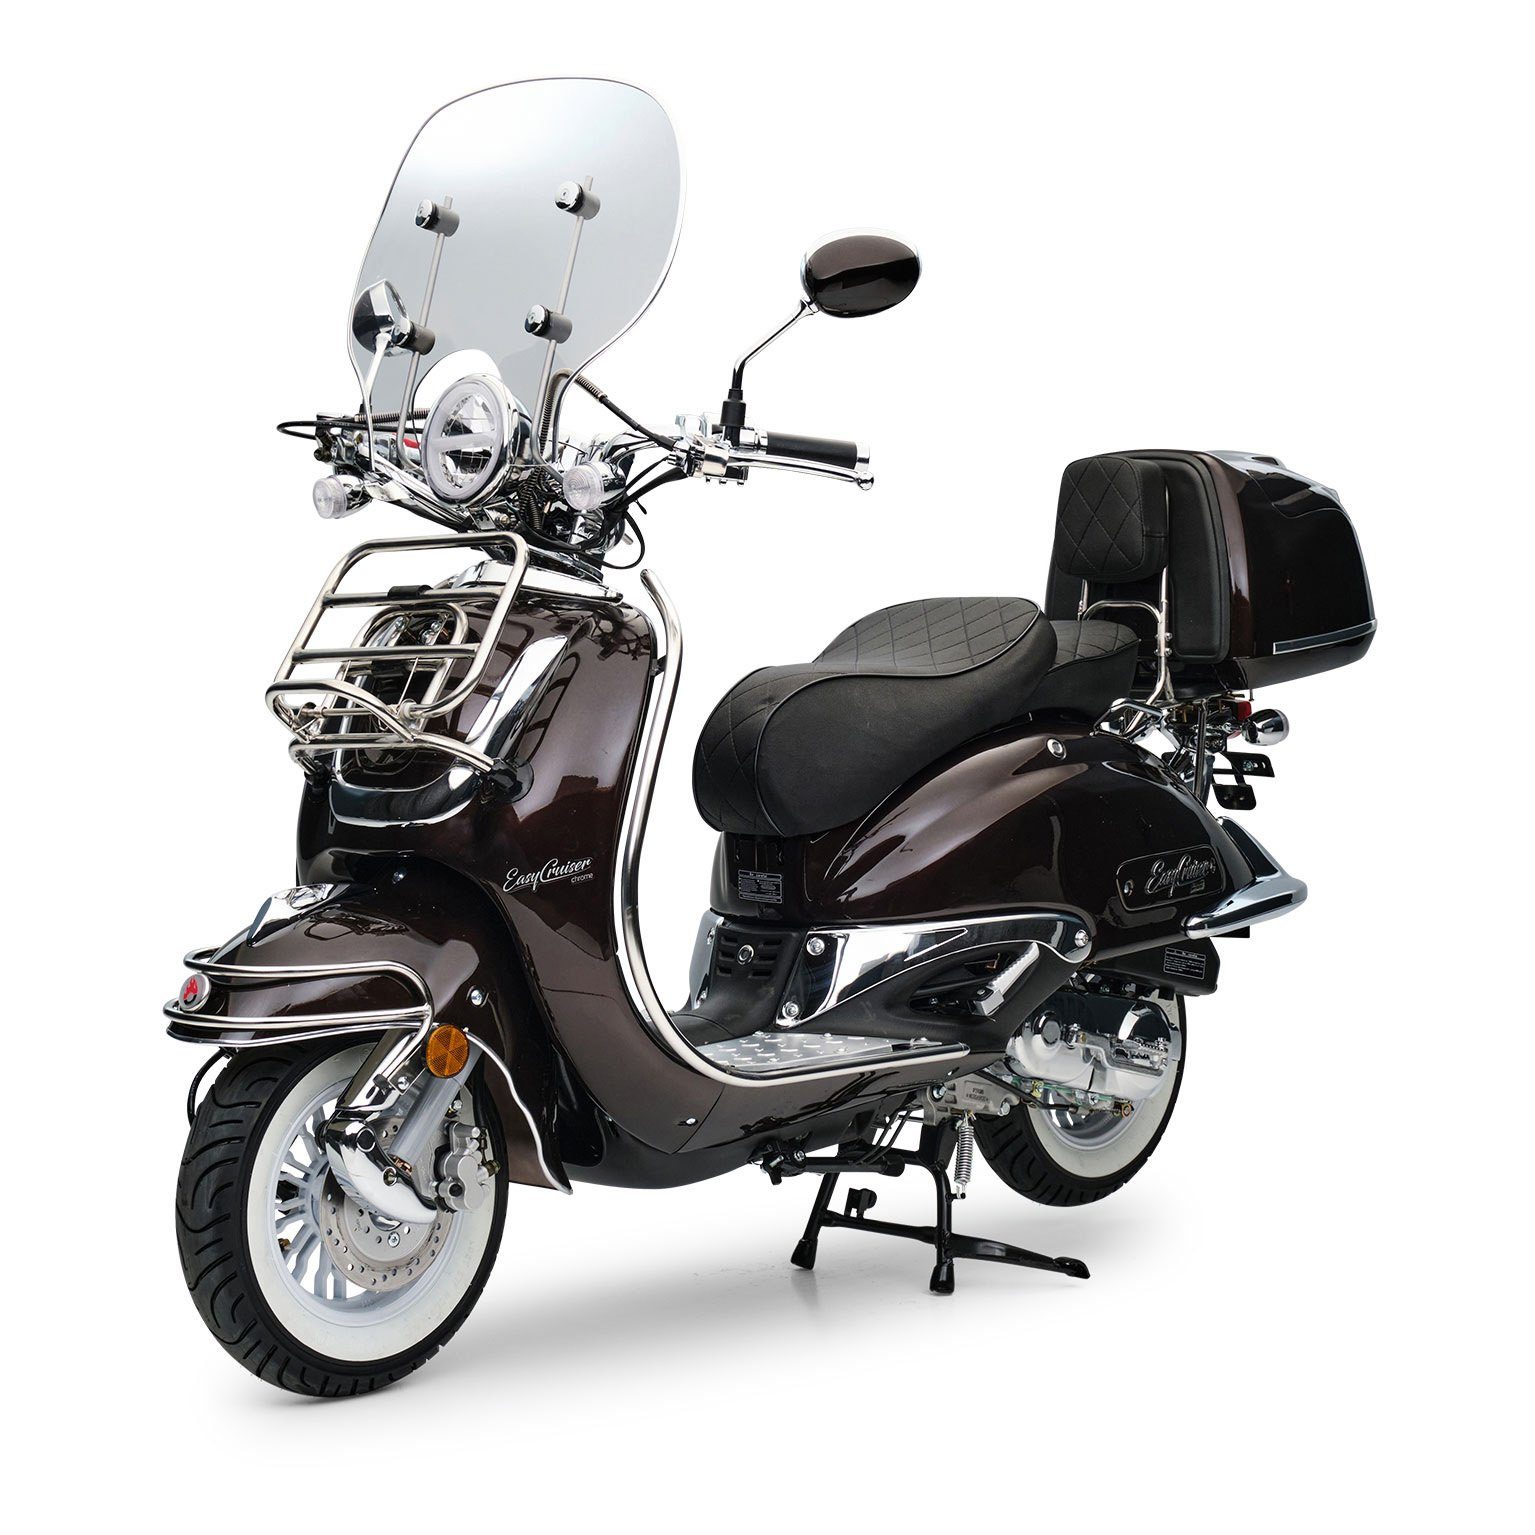 Burnout Motorroller EasyCruiser Chrom Braun Metallic, 50 ccm, 45 km/h, Euro 5, LED Beleuchtung, Digitales Tacho, Retro, mit Windschild & Topcase, USB